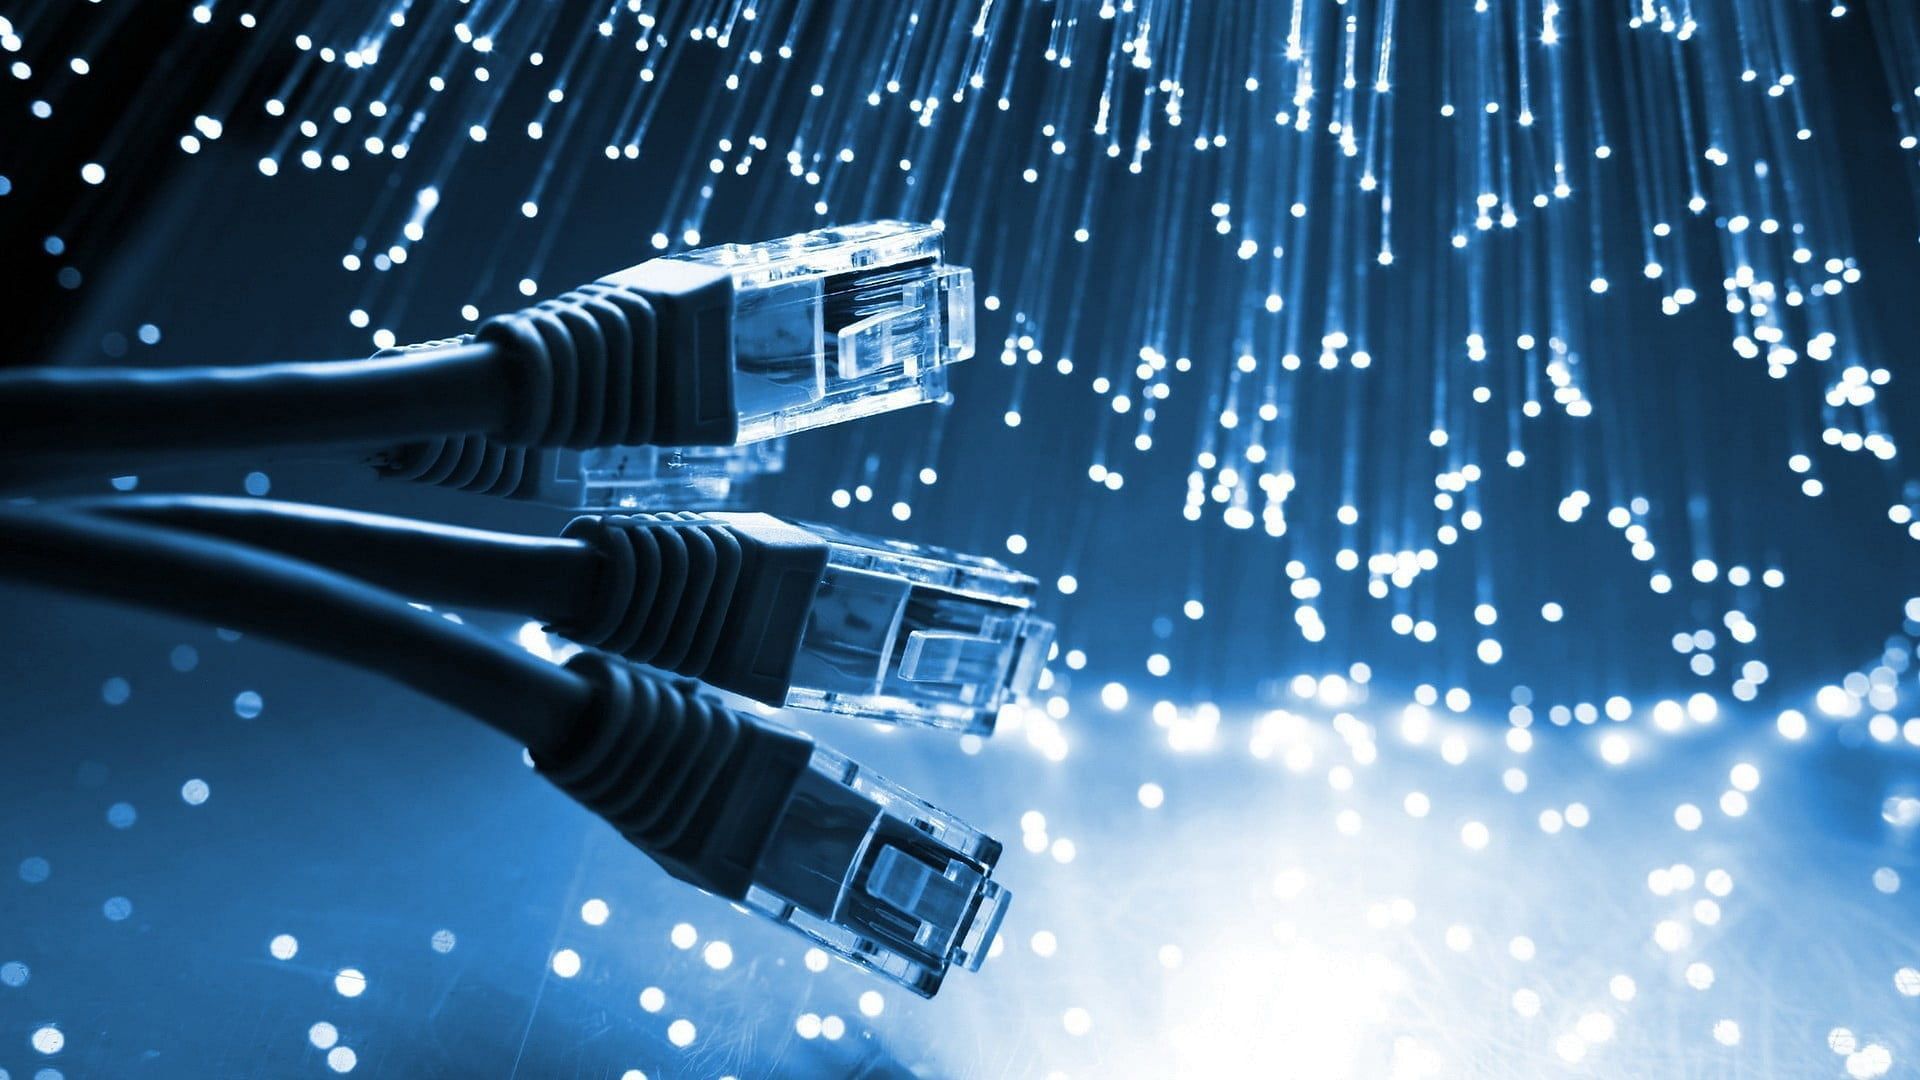 Ethernet connection (Image via Google Images)